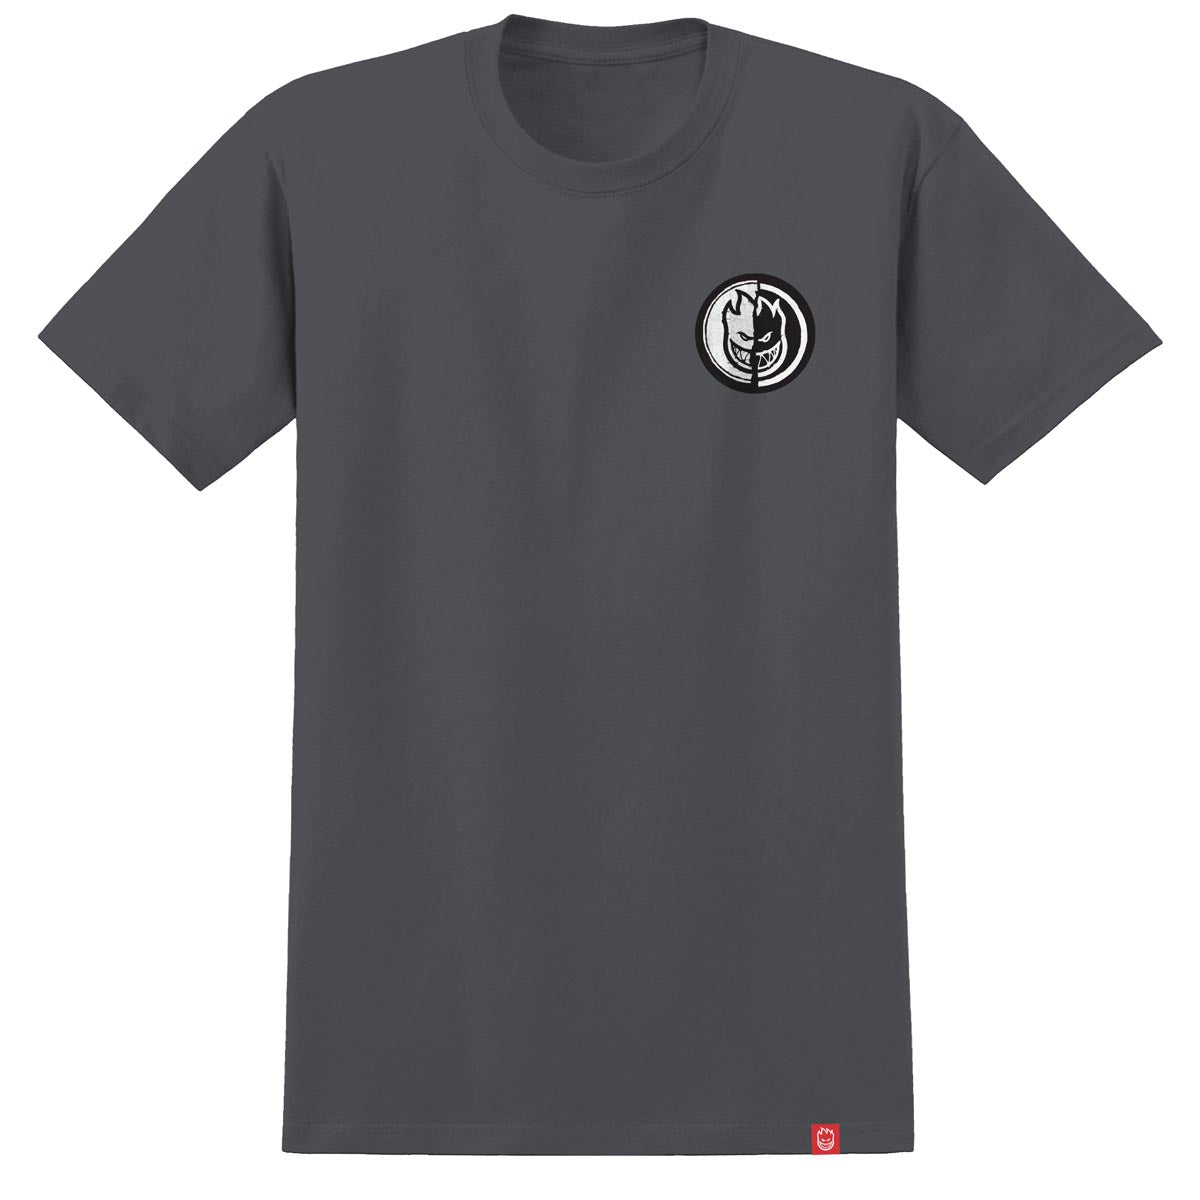 Spitfire Yin Yang T-Shirt - Charcoal/Black/White image 2